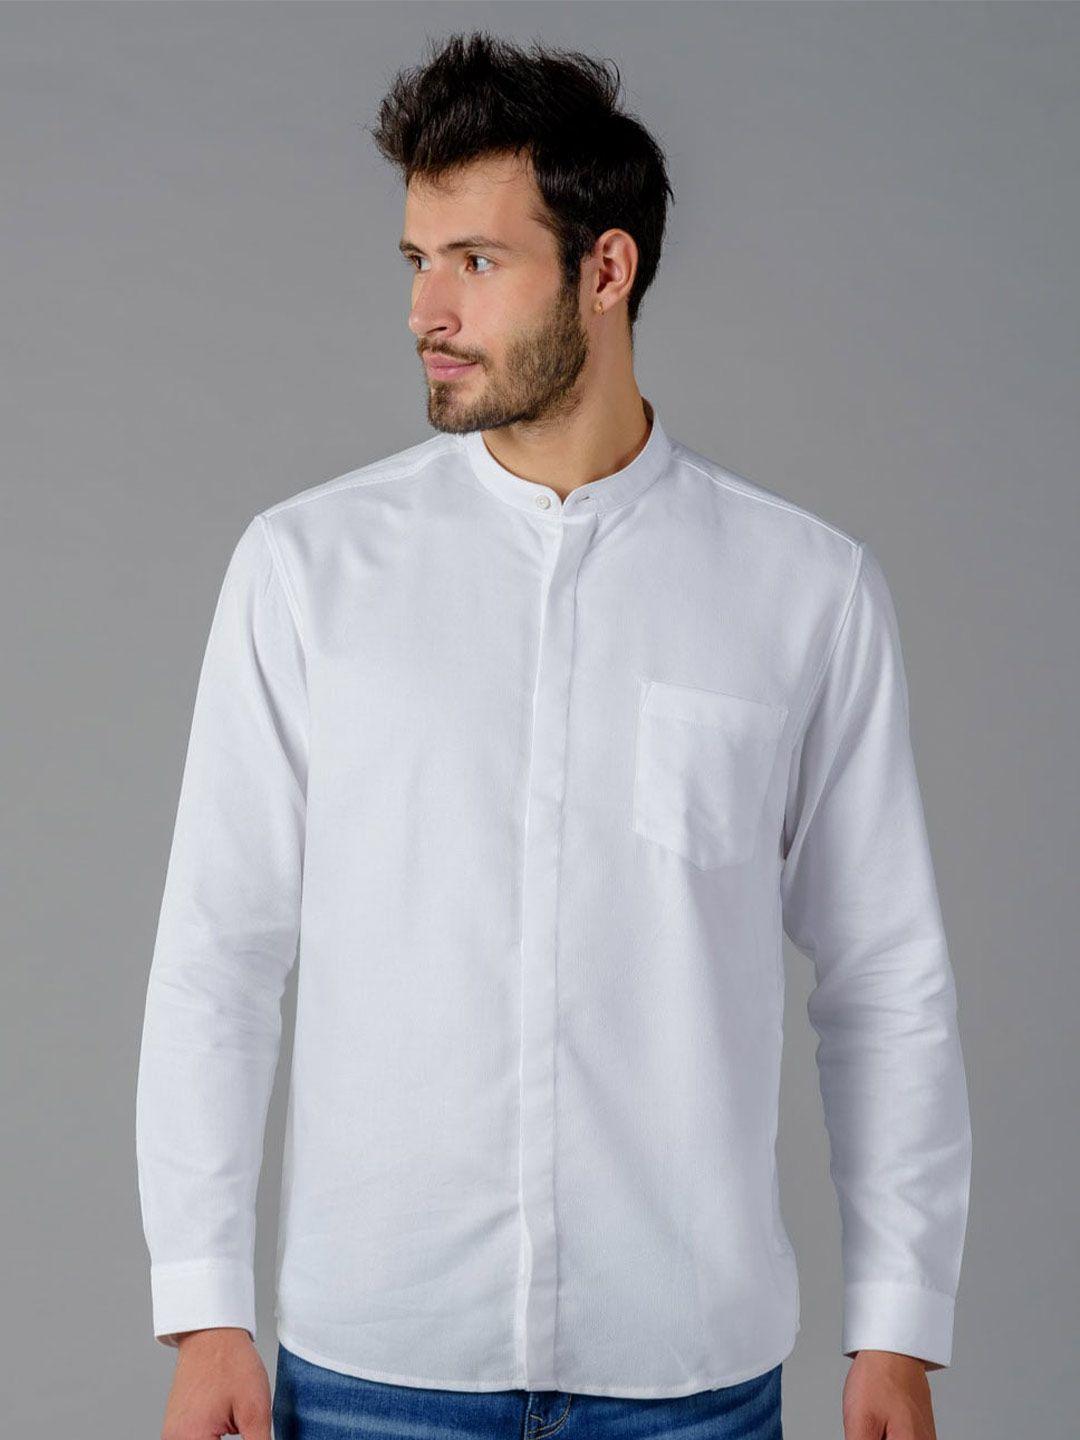 kingdom of white opaque cotton casual shirt